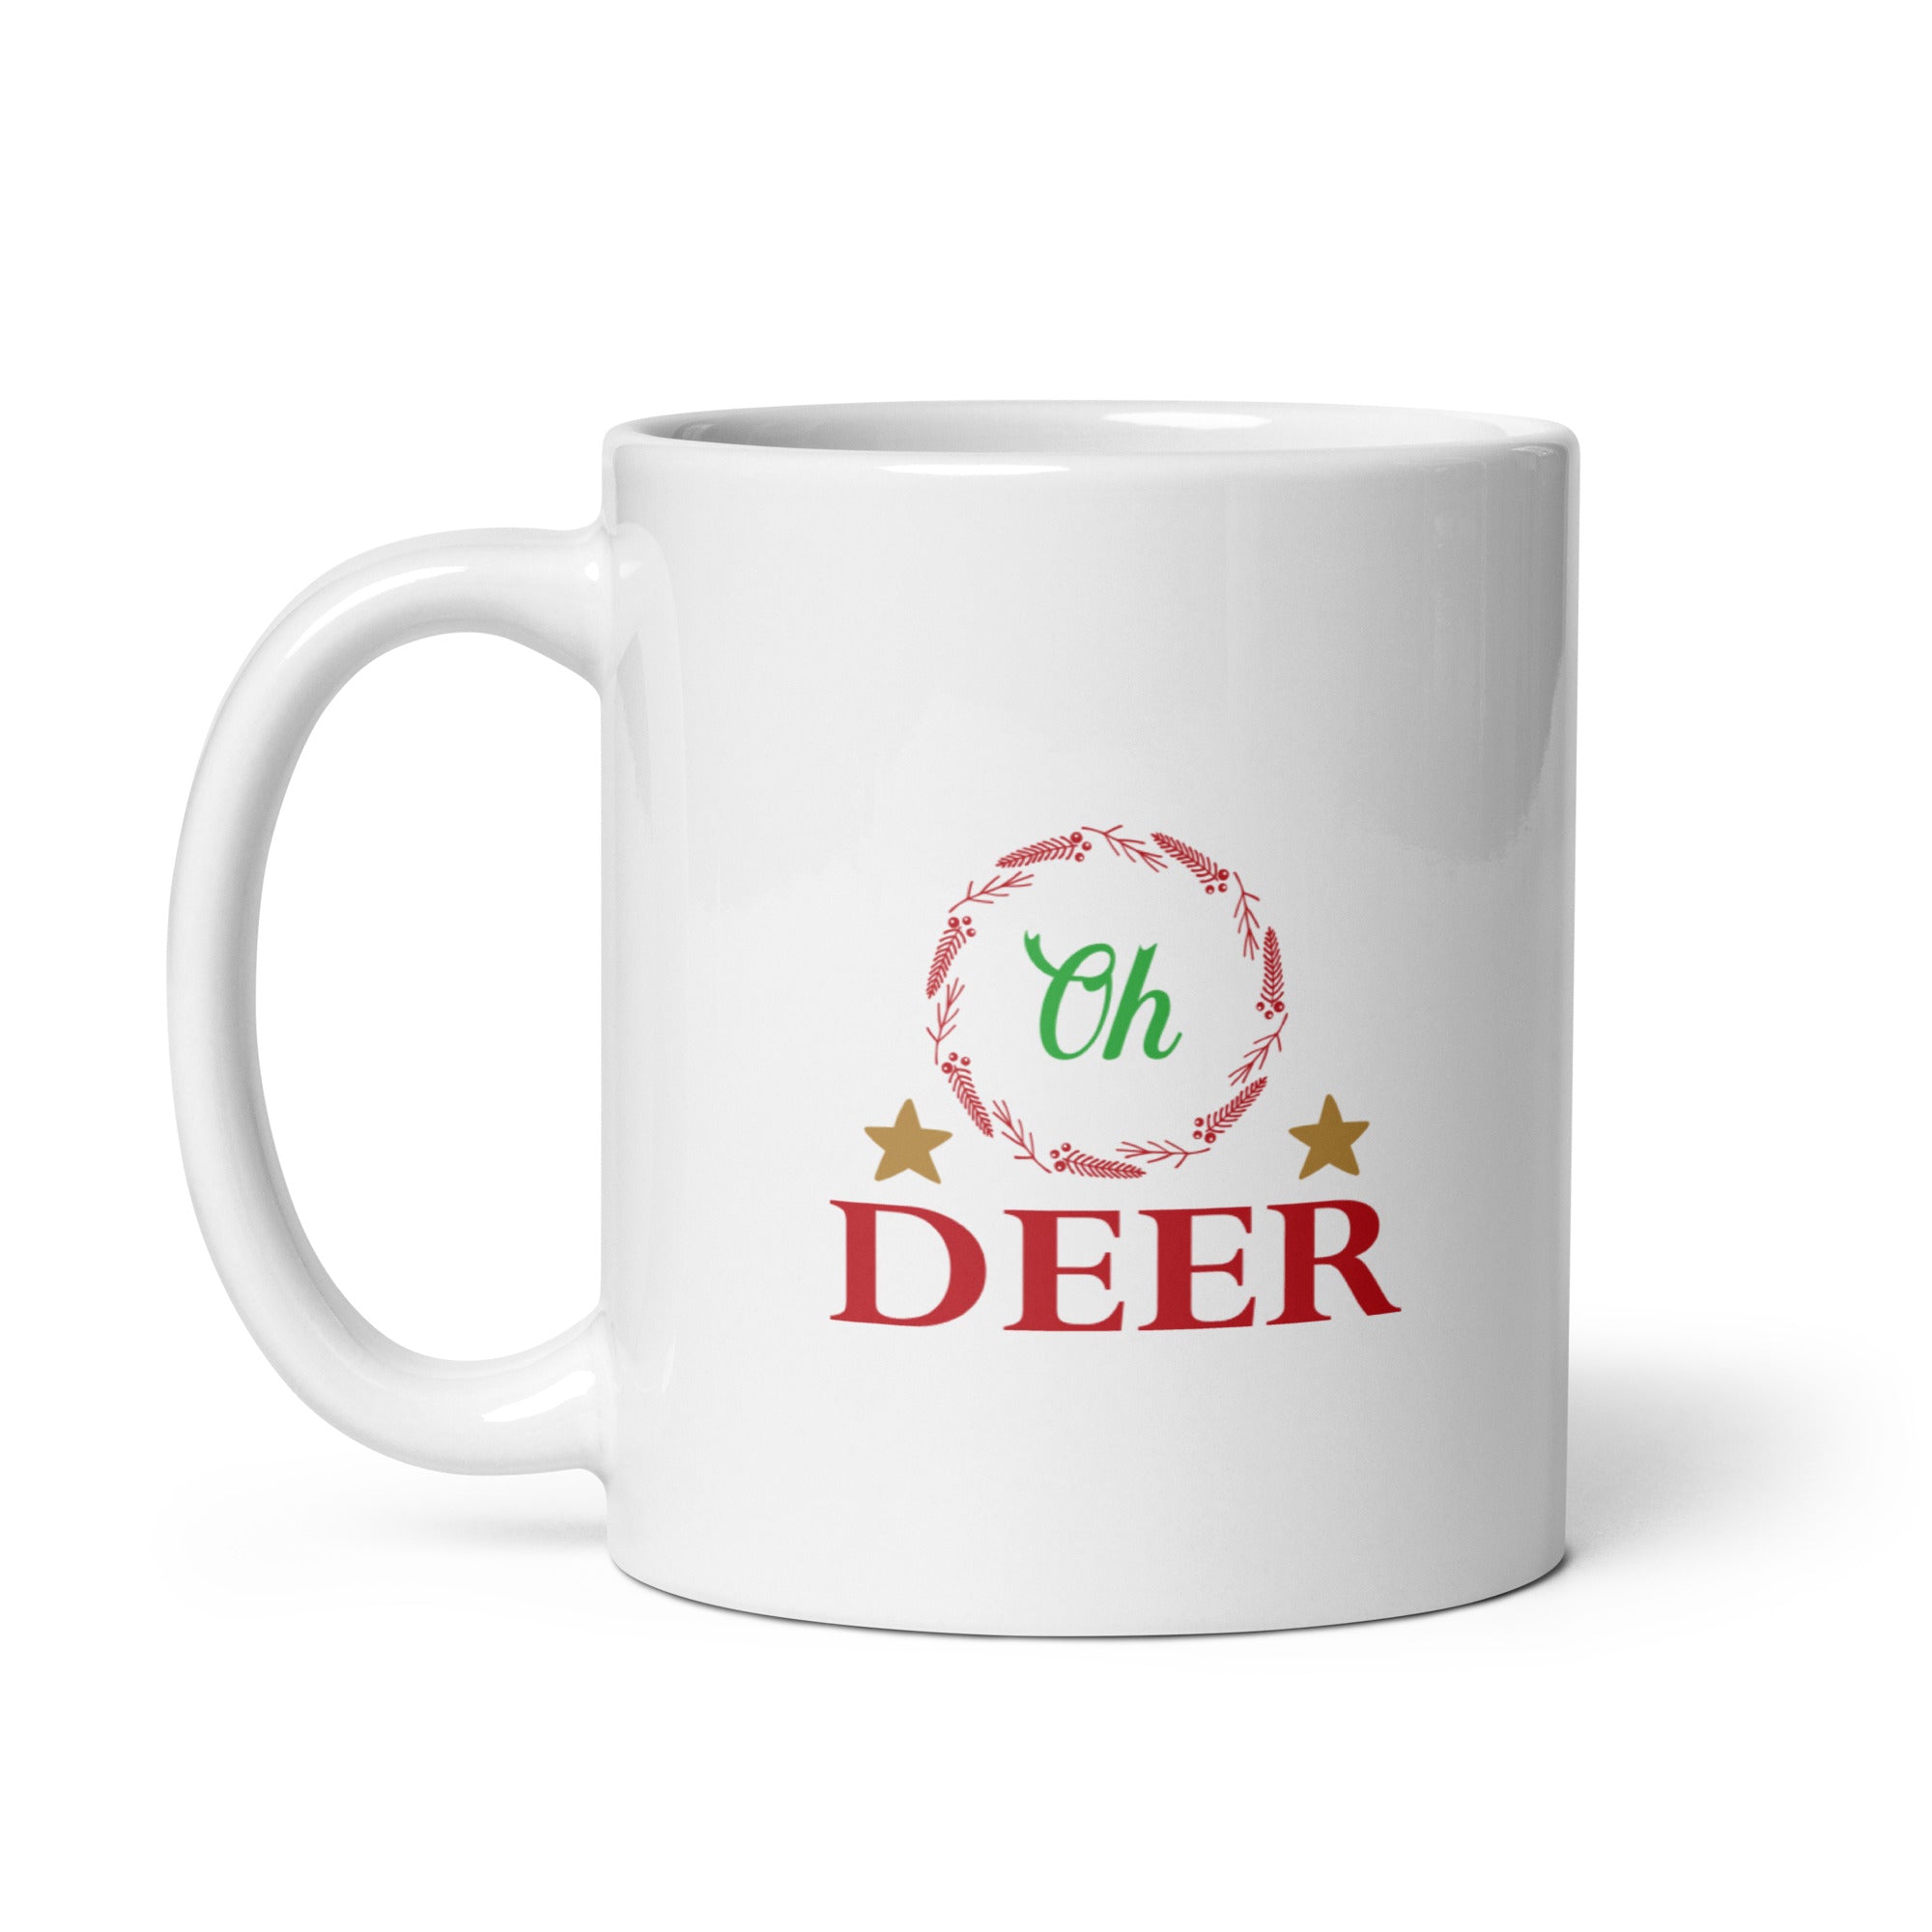 Oh Deer - White glossy mug